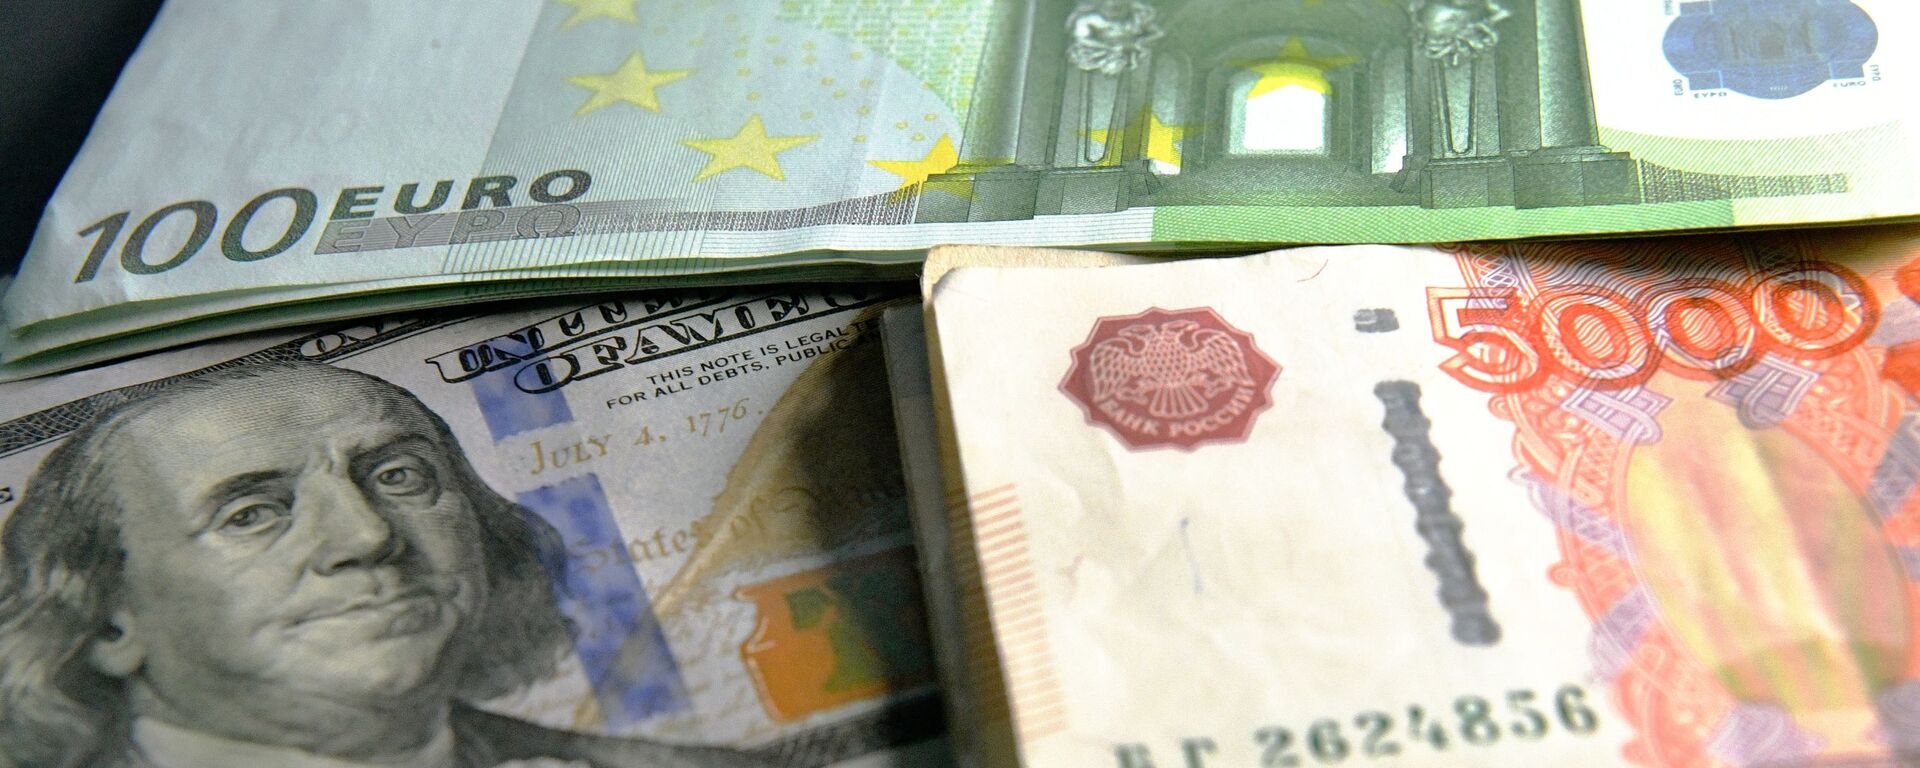 Евро, доллар жана рубль купюралары. Архив - Sputnik Кыргызстан, 1920, 12.04.2022